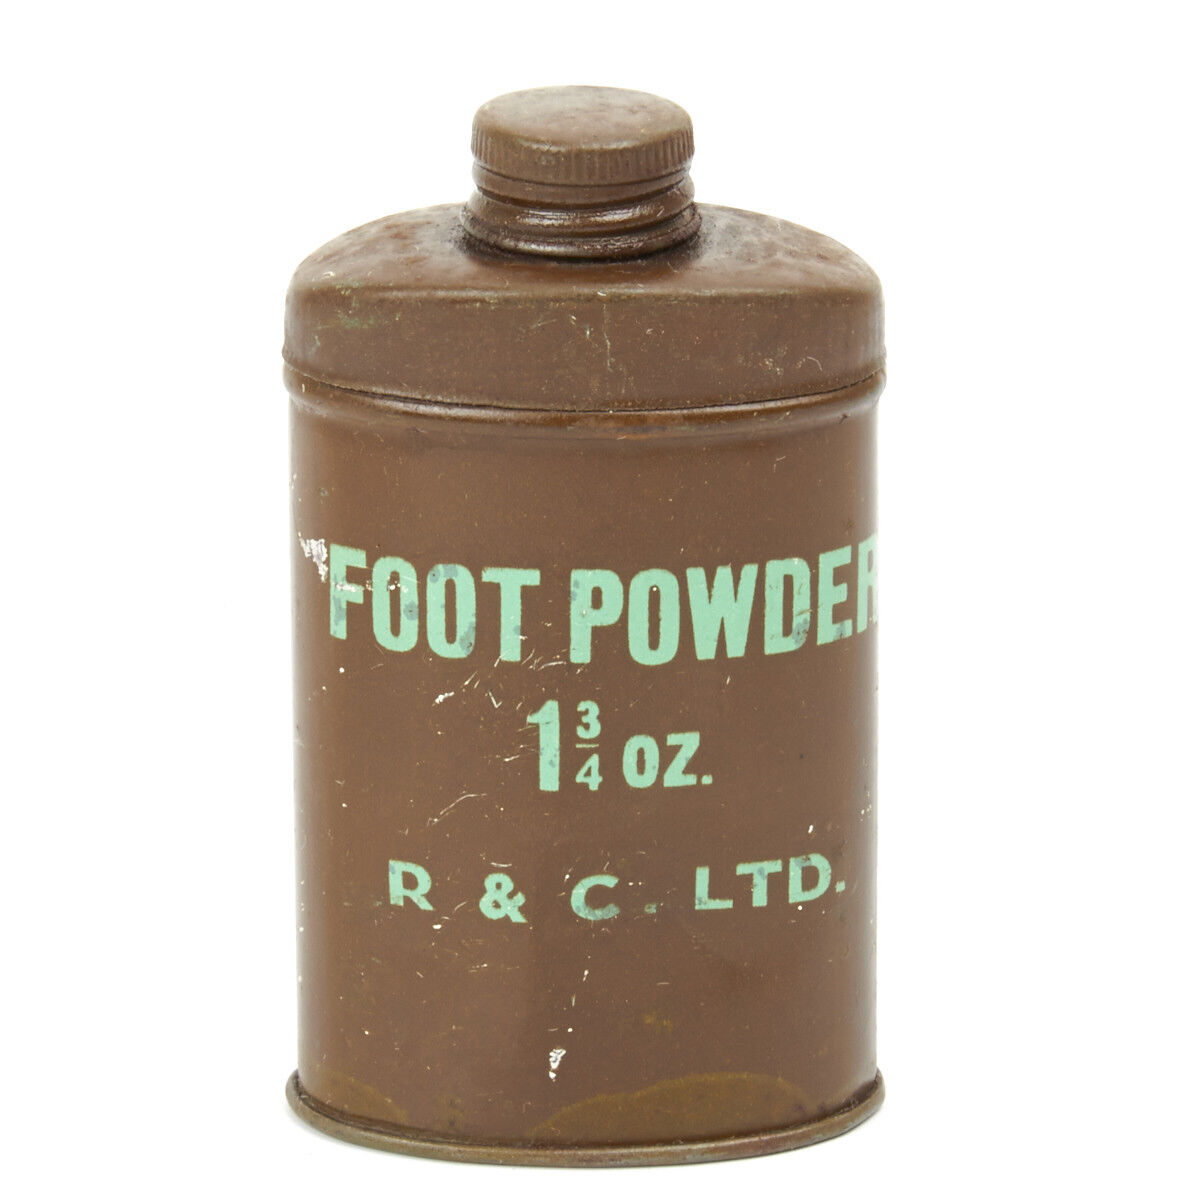 Original WWII British Army Foot Powder- Unissued